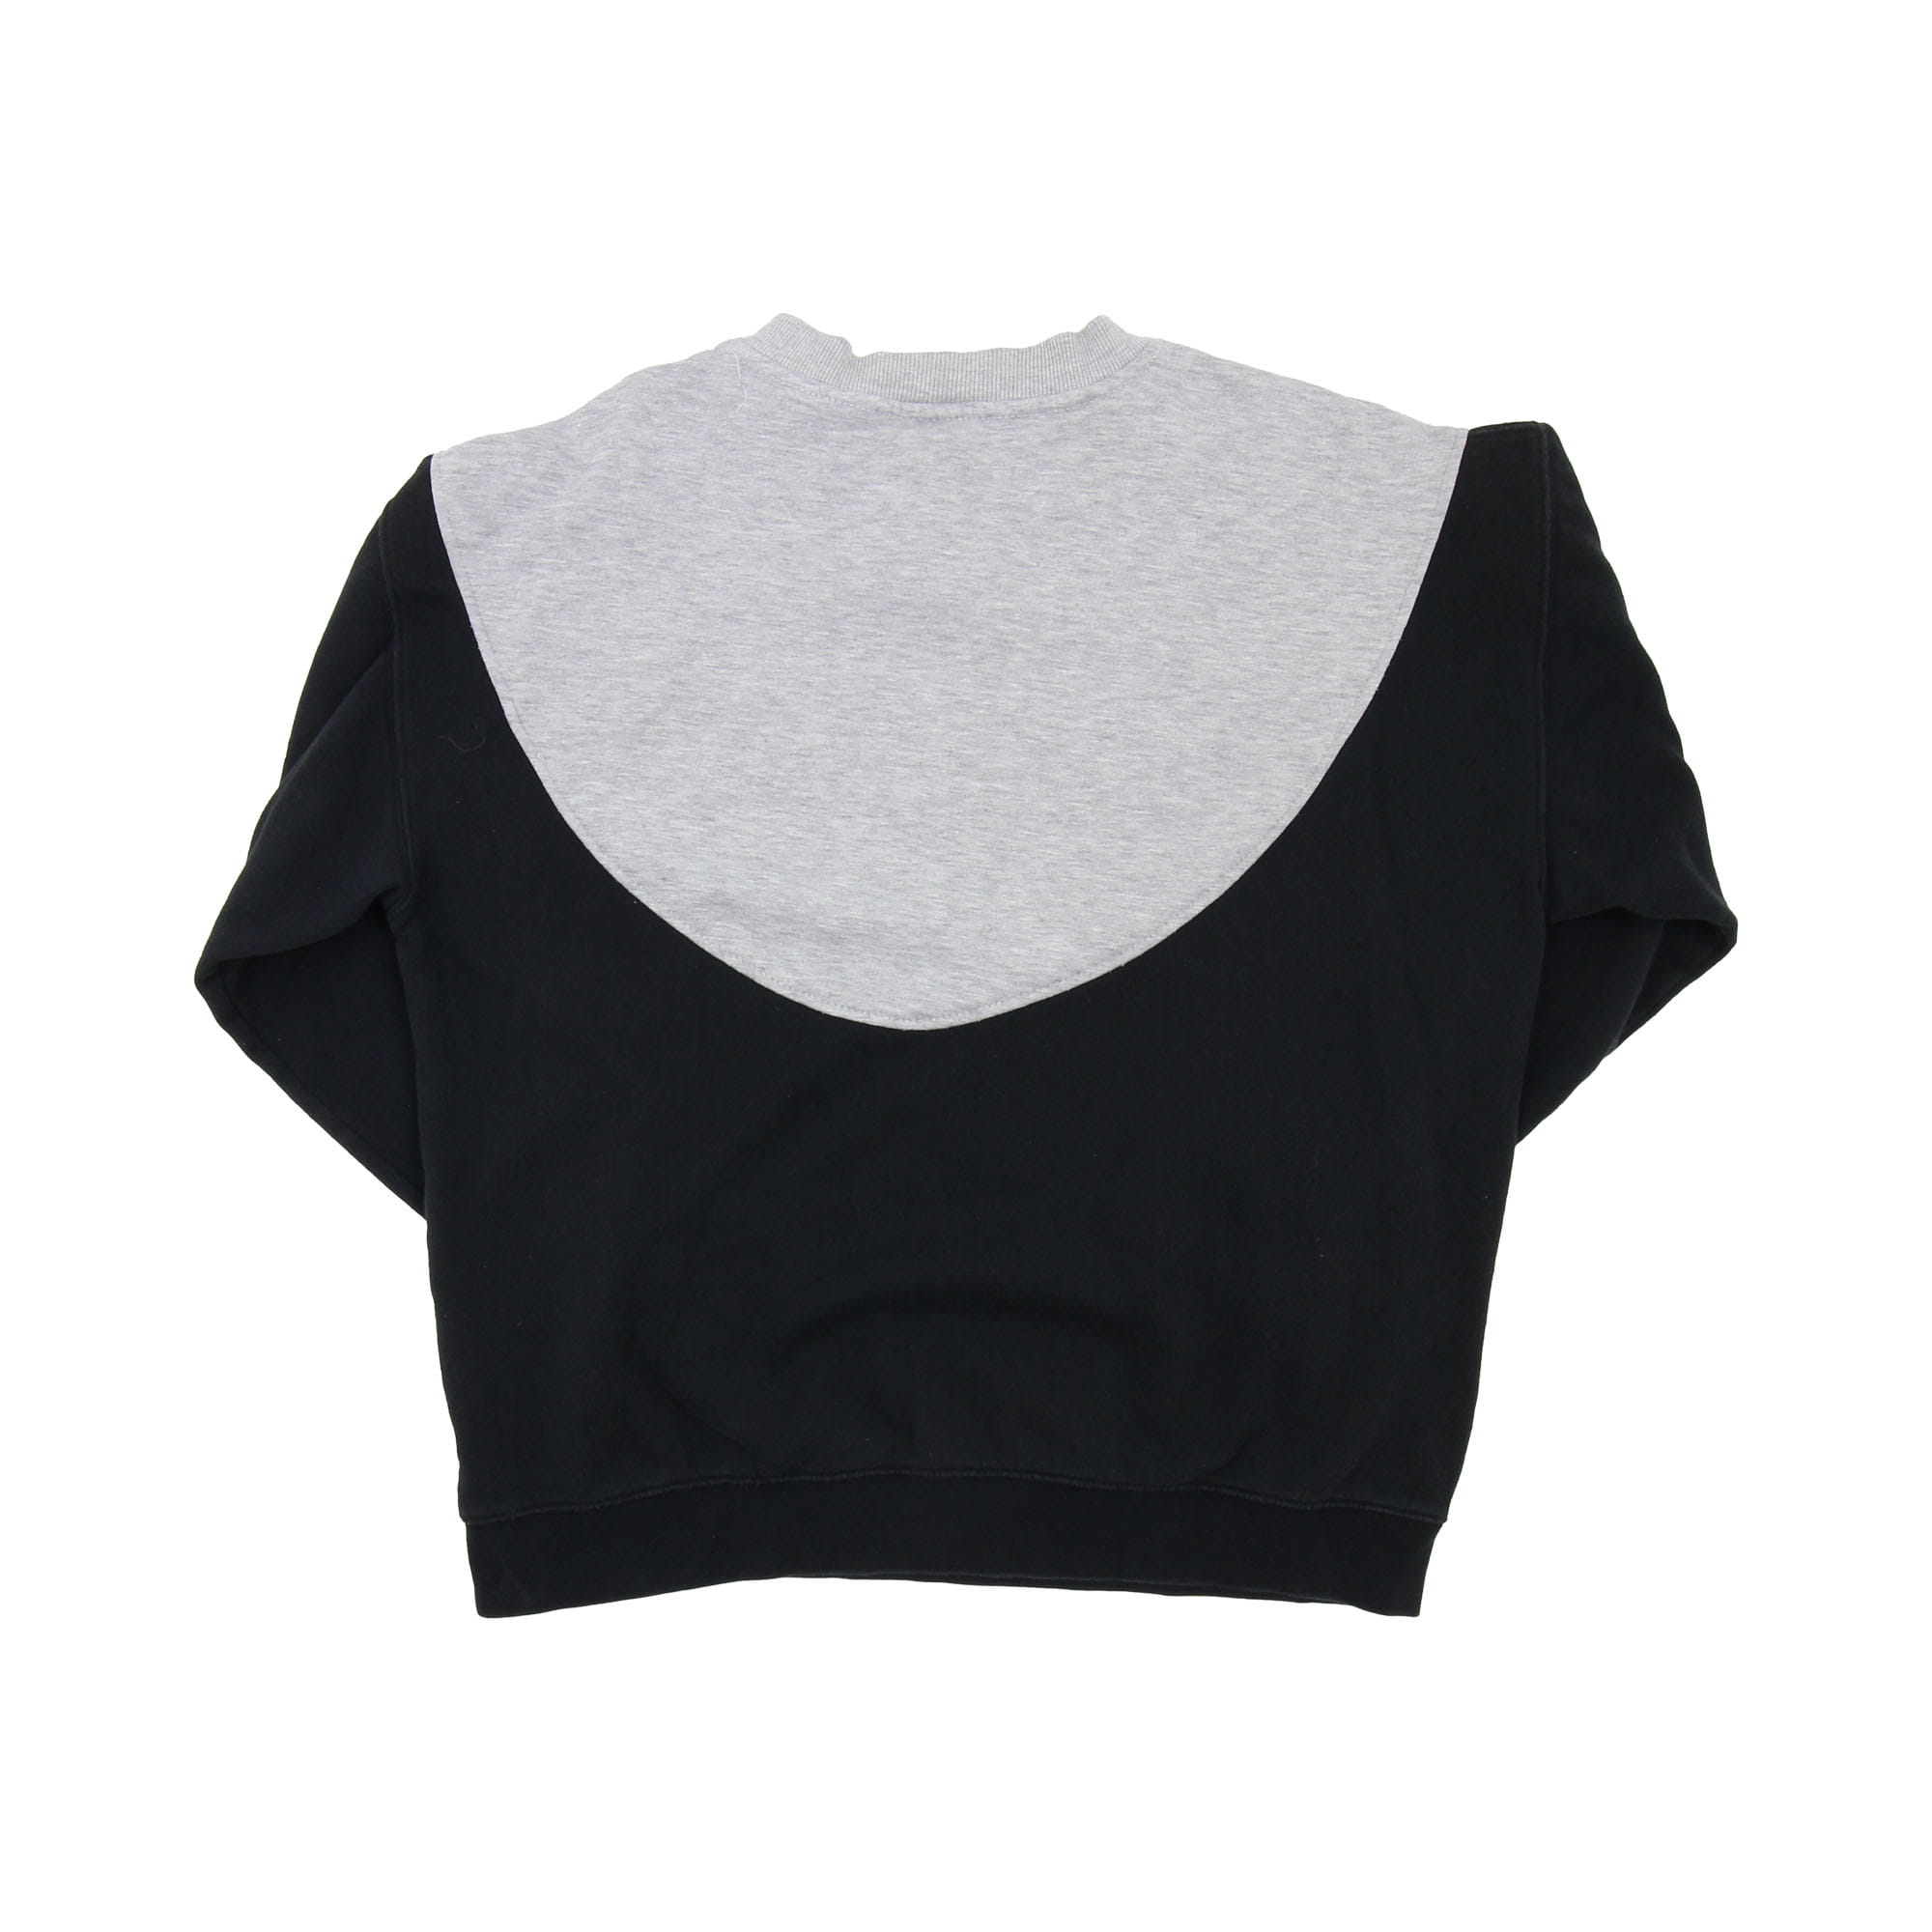 Umbro Rework Sweatshirt -  M/L